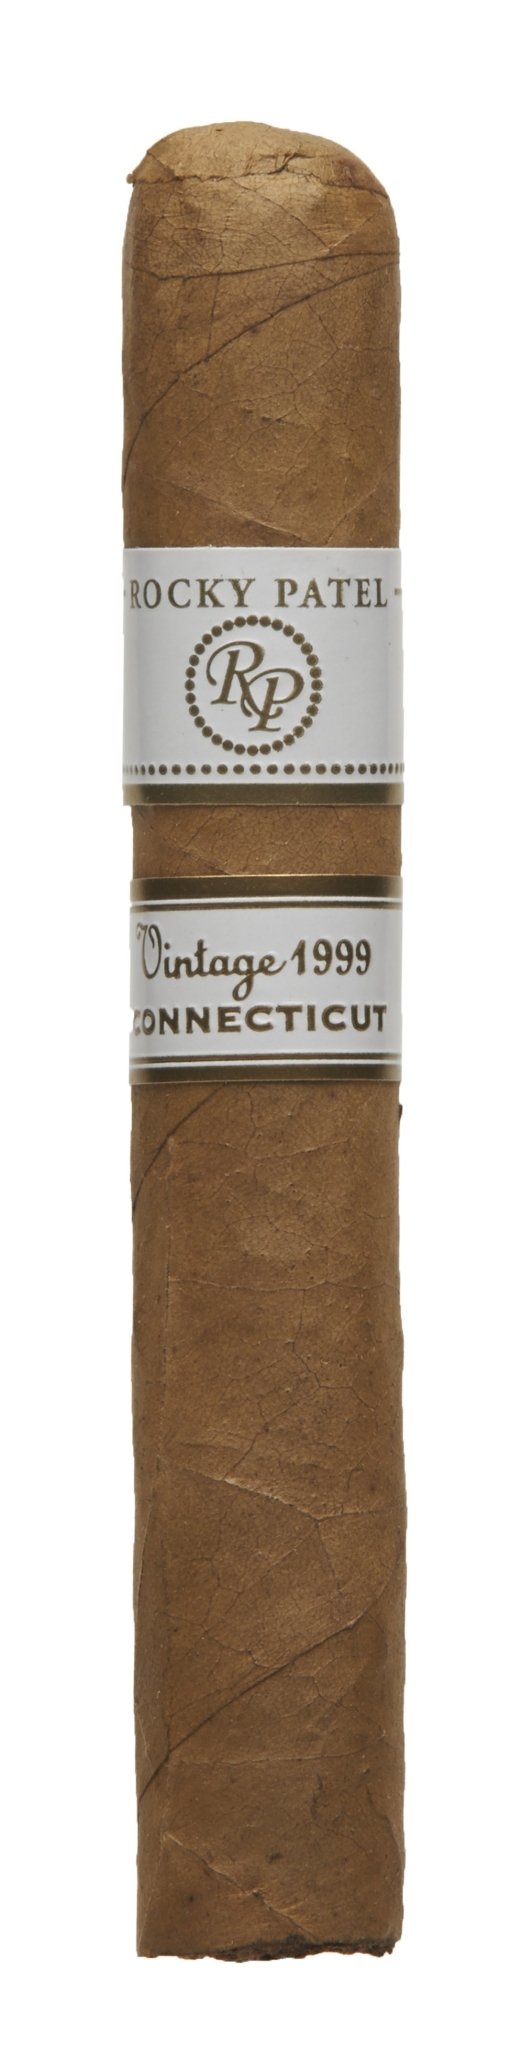 Vintage 1999 Sixty Connecticut - Cigar Port